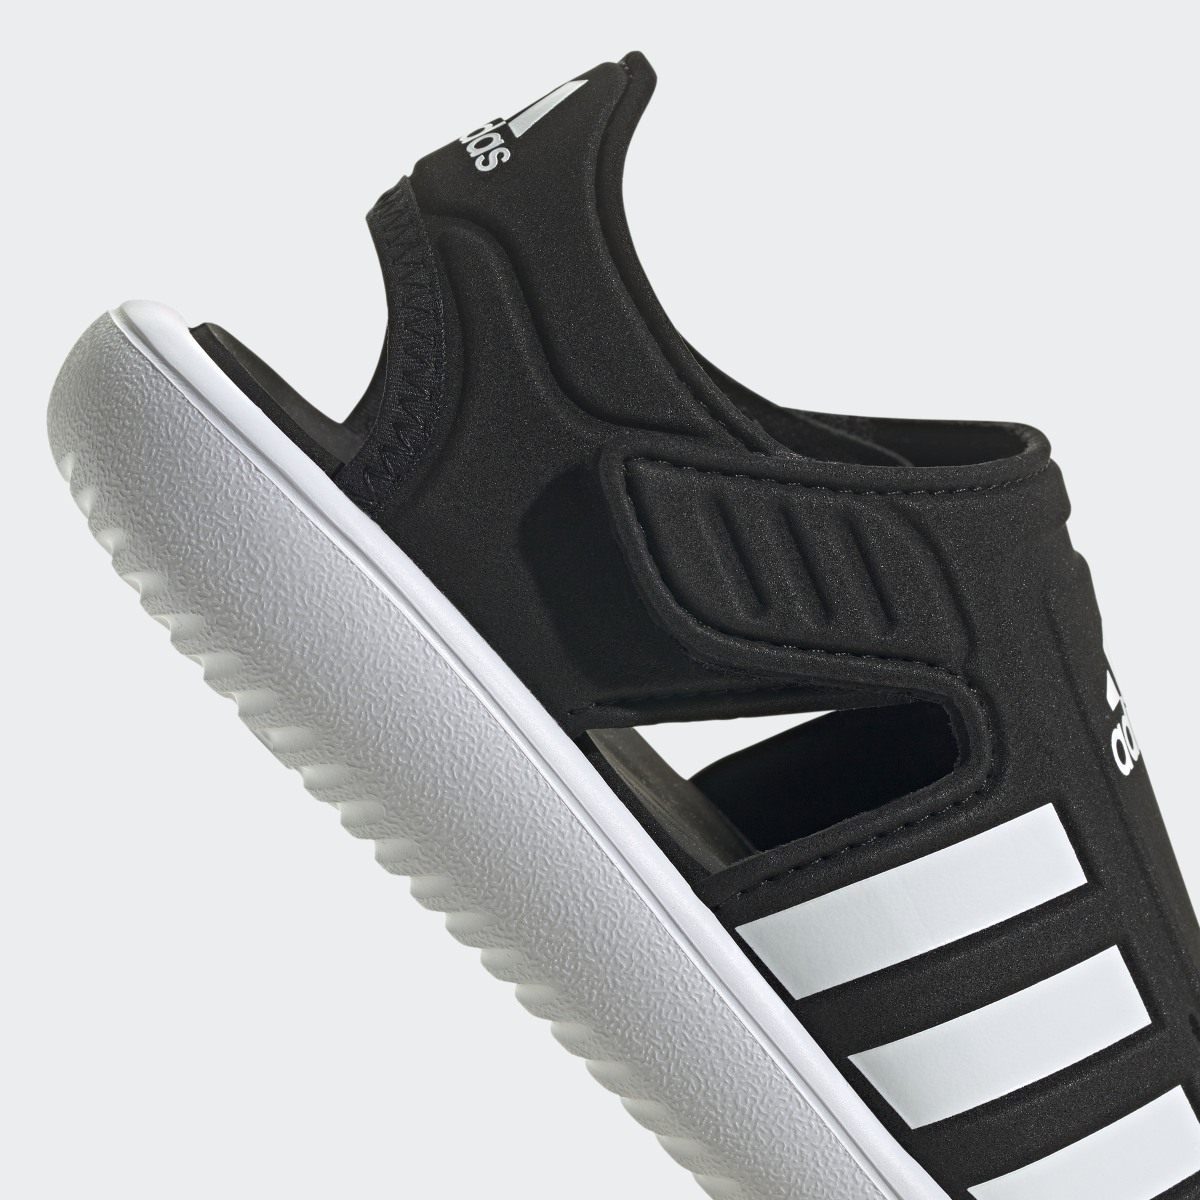 Adidas Summer Closed Toe Water Sandale. 10